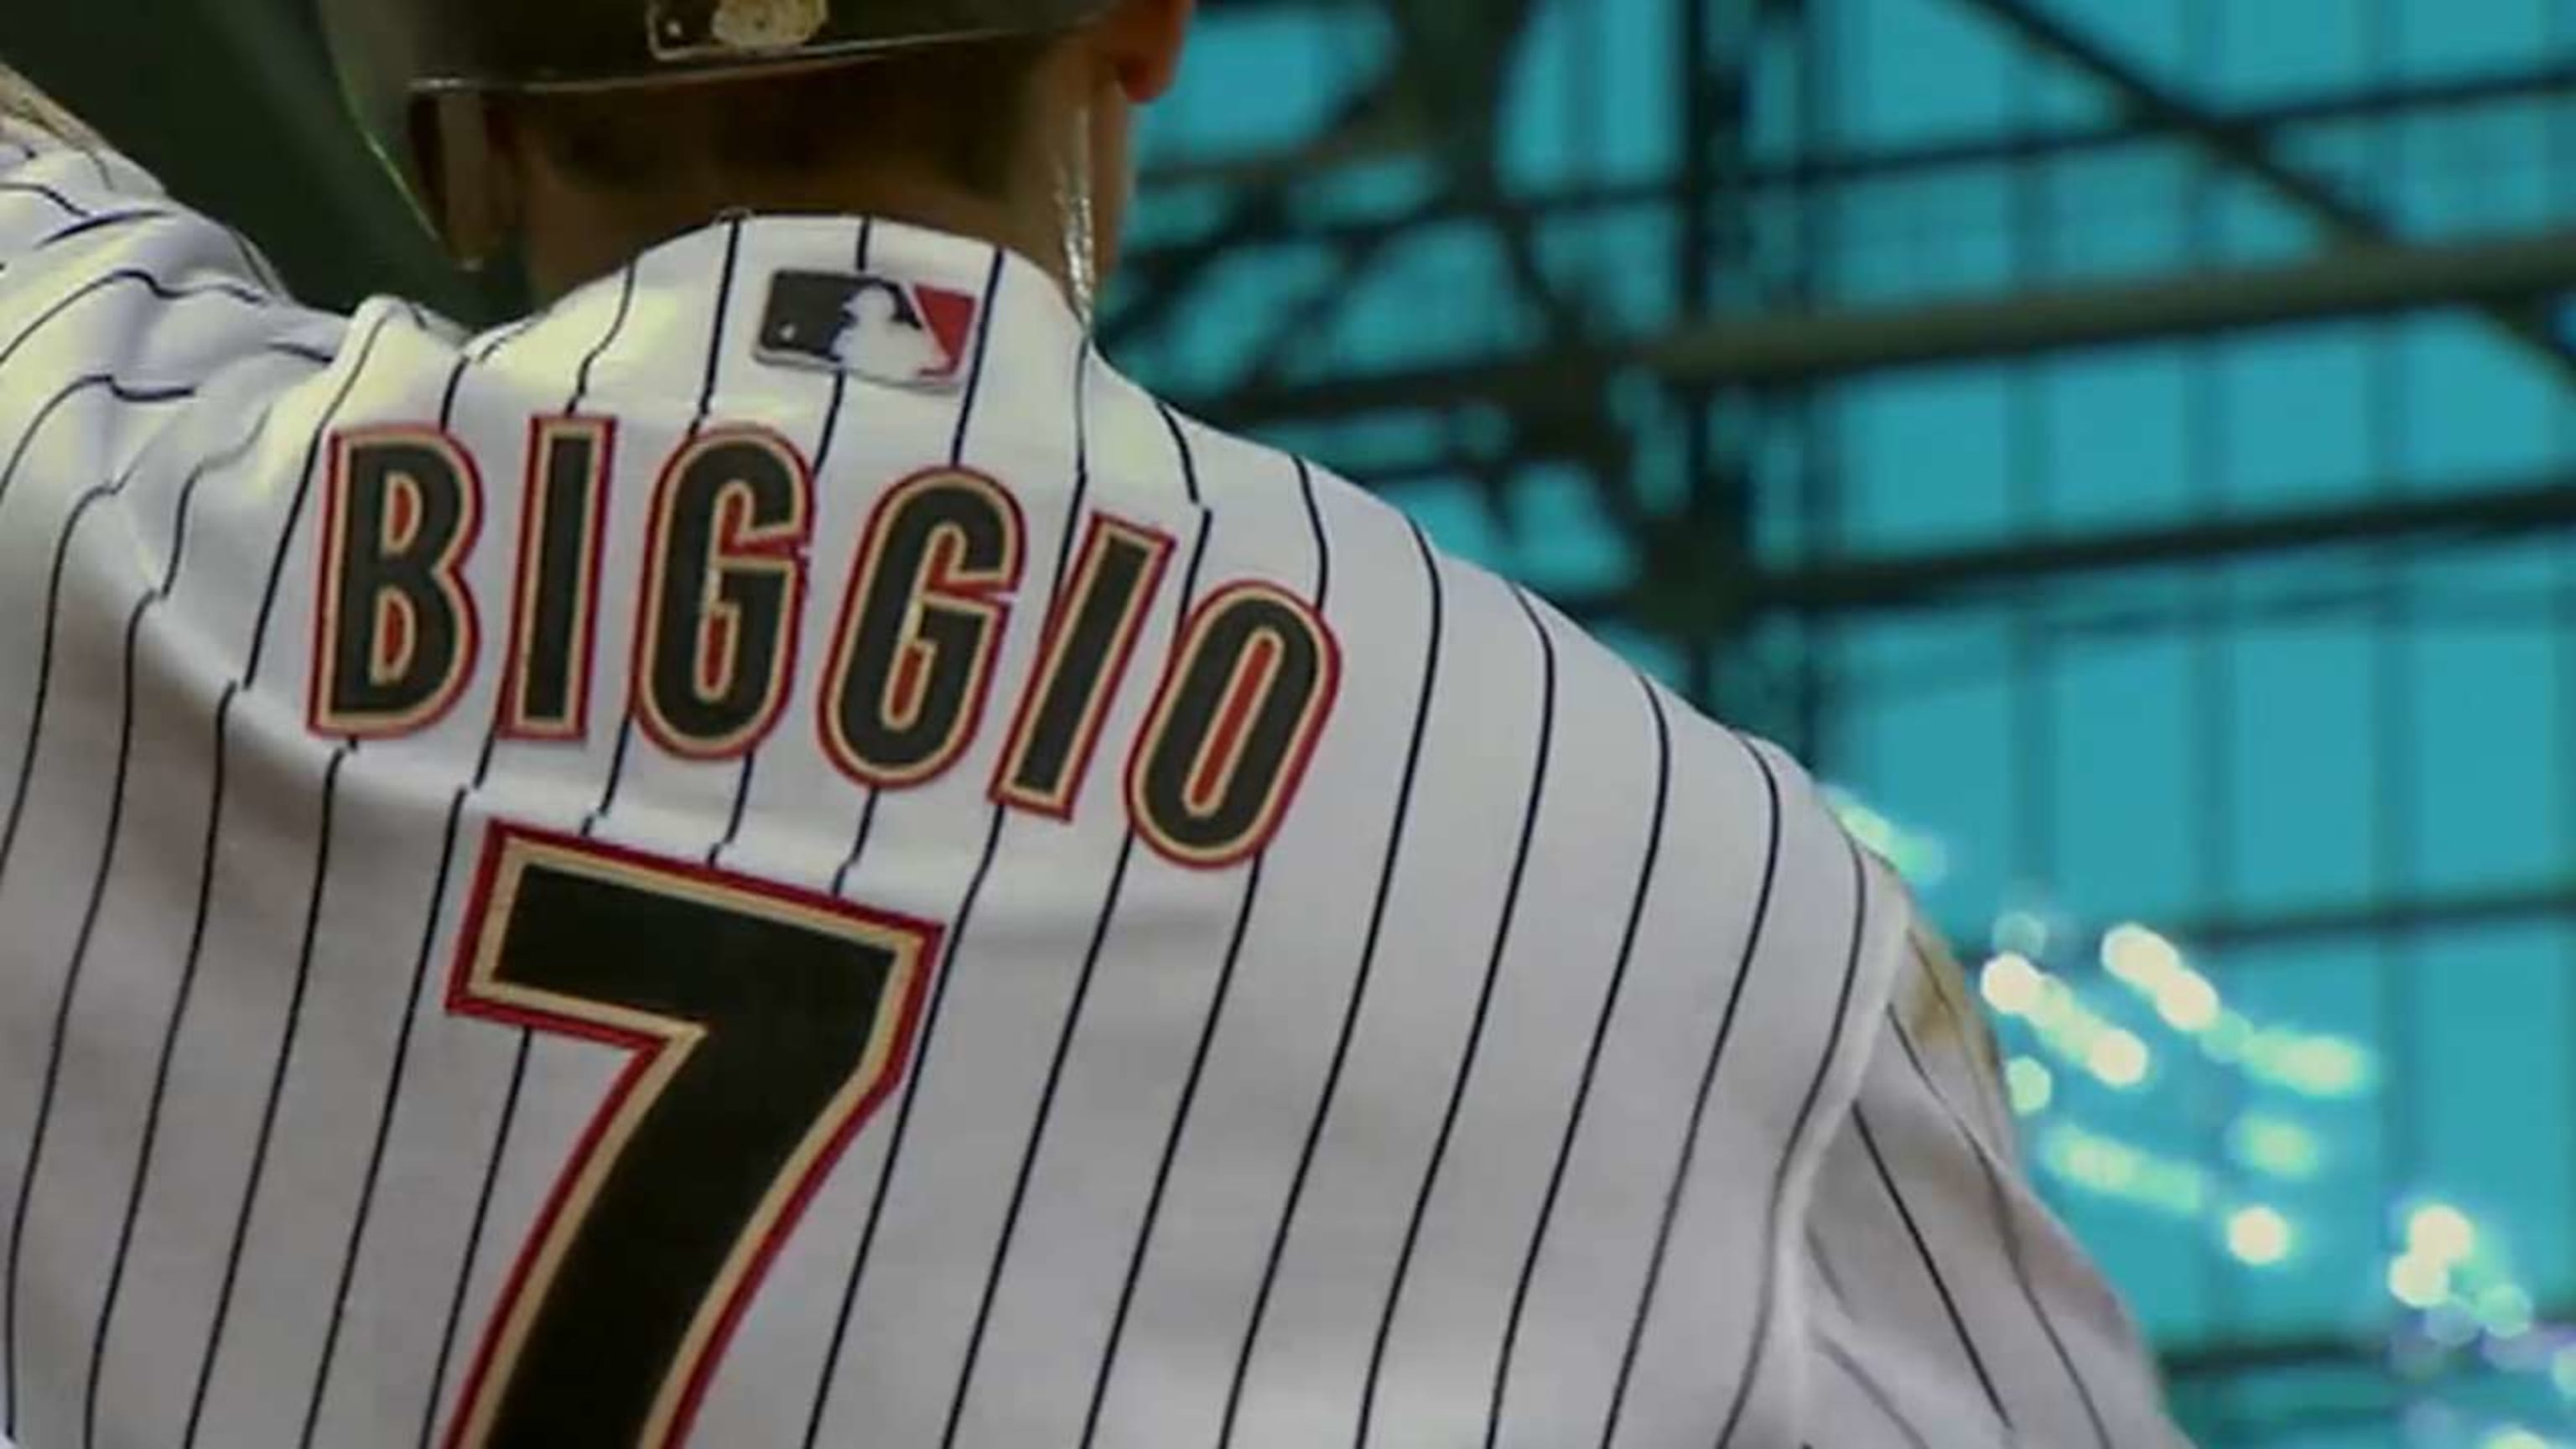 Craig Biggio brings dignity to Hall of Fame